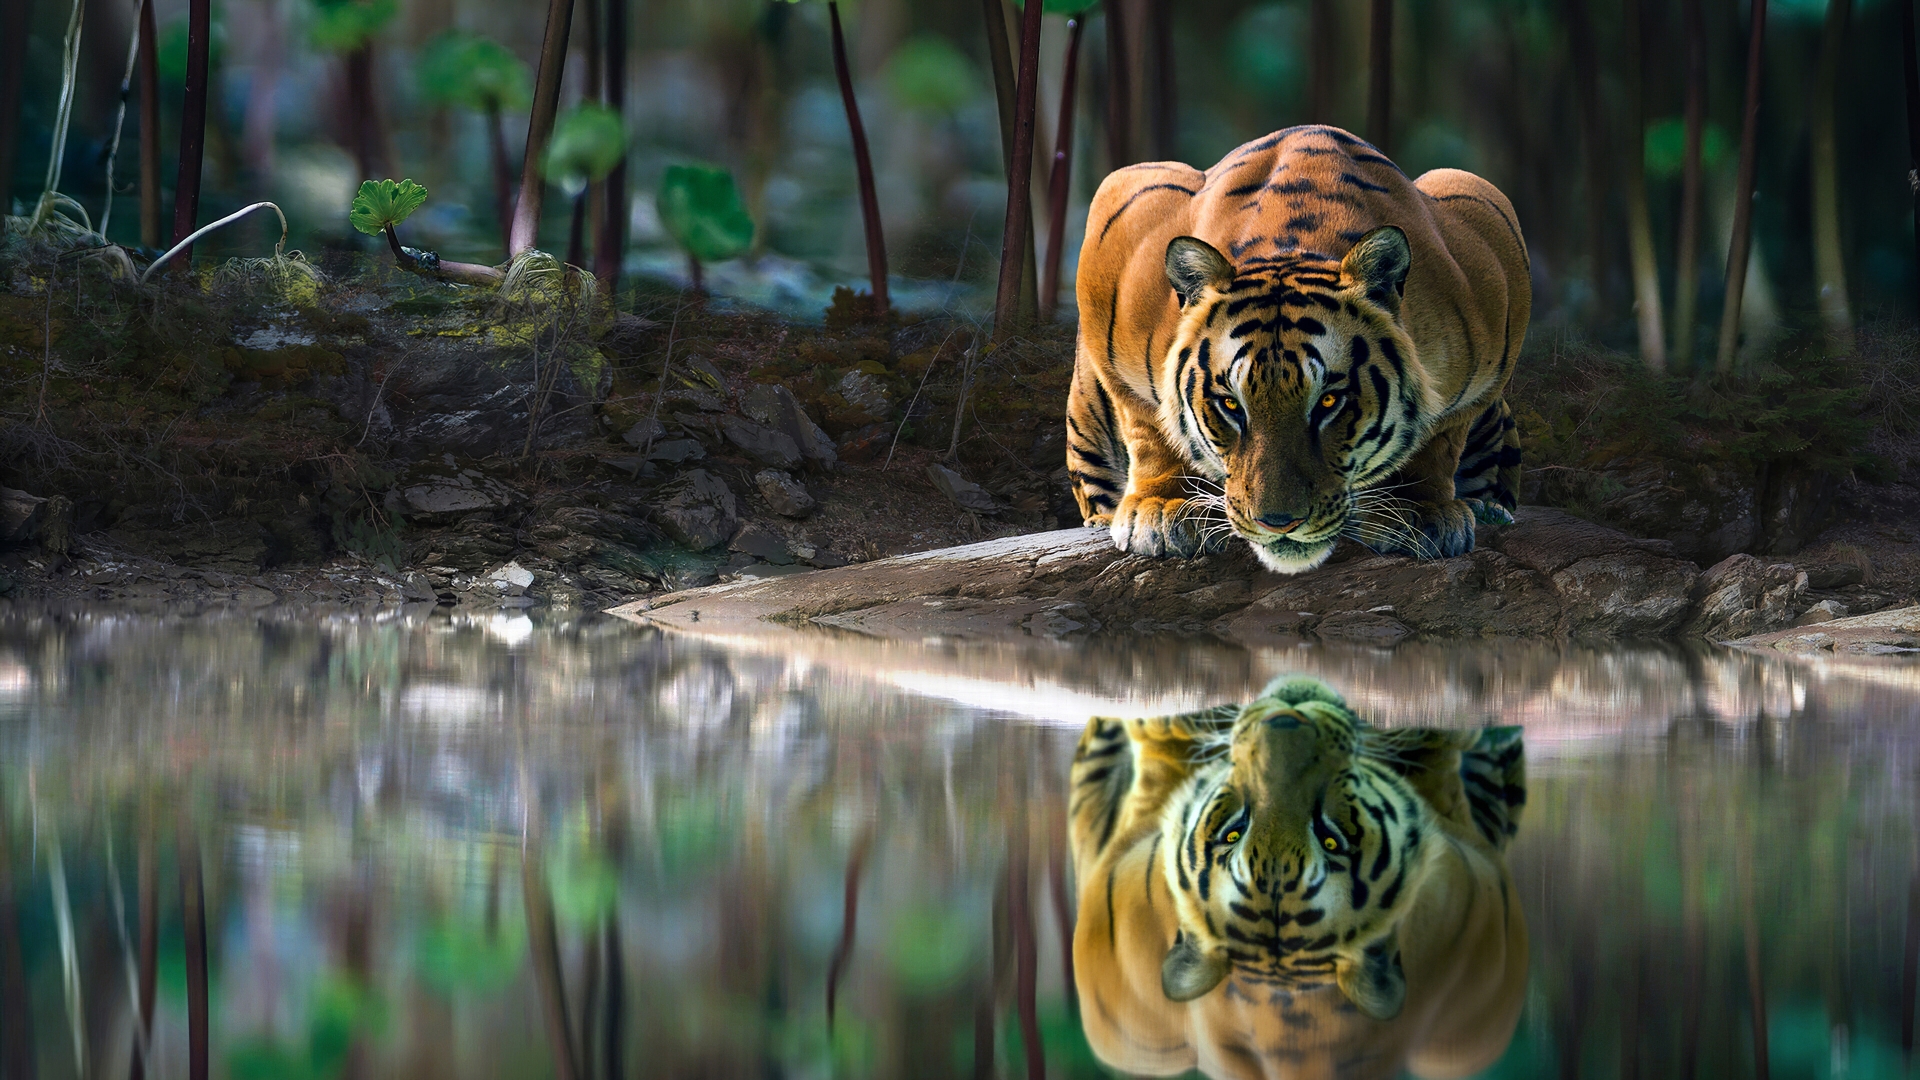 Tiger reflected in lake Wallpaper 4k Ultra HD ID:4556